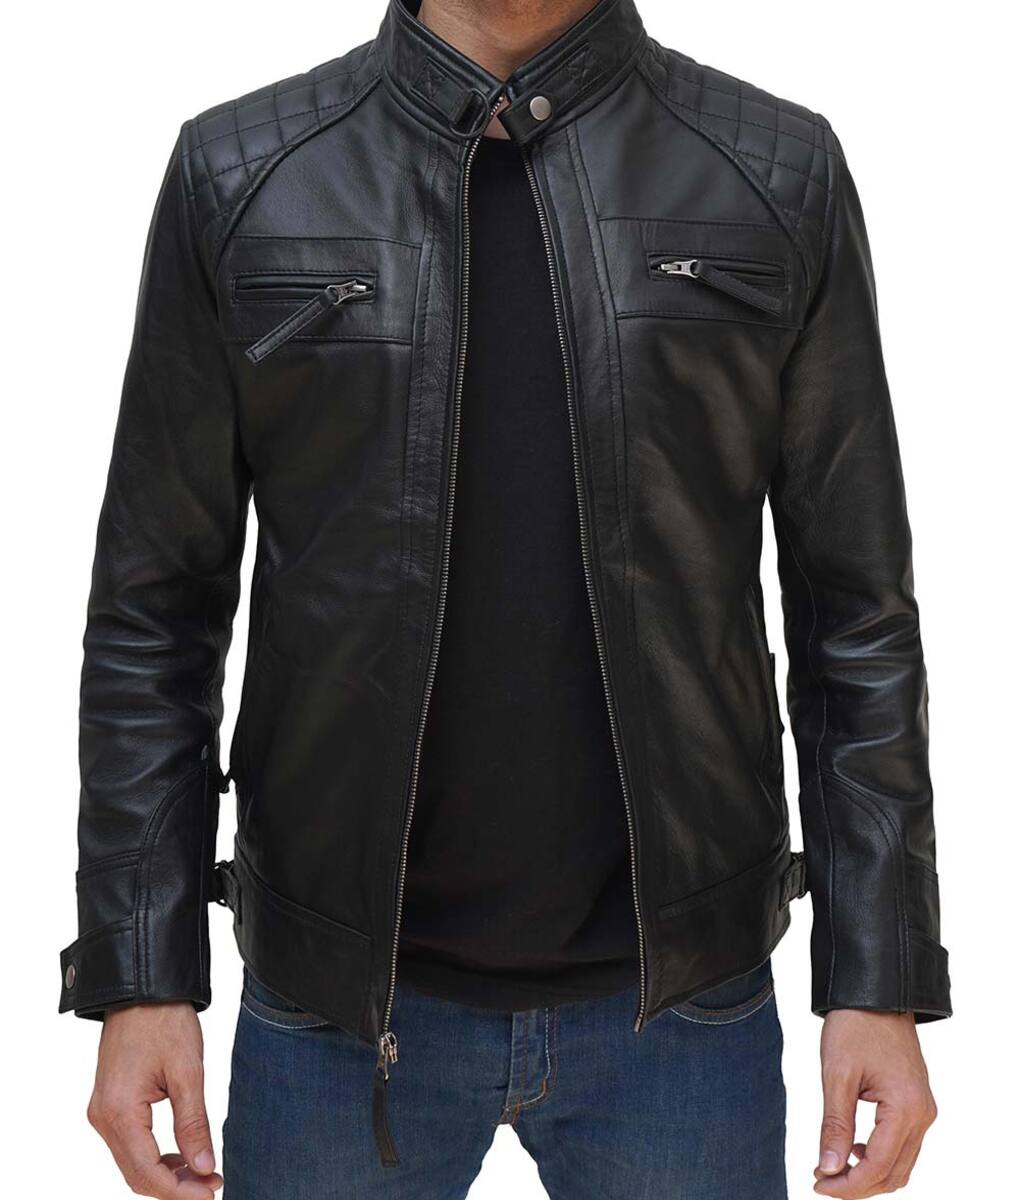 Black_leather_jacket_with_hood_for_men